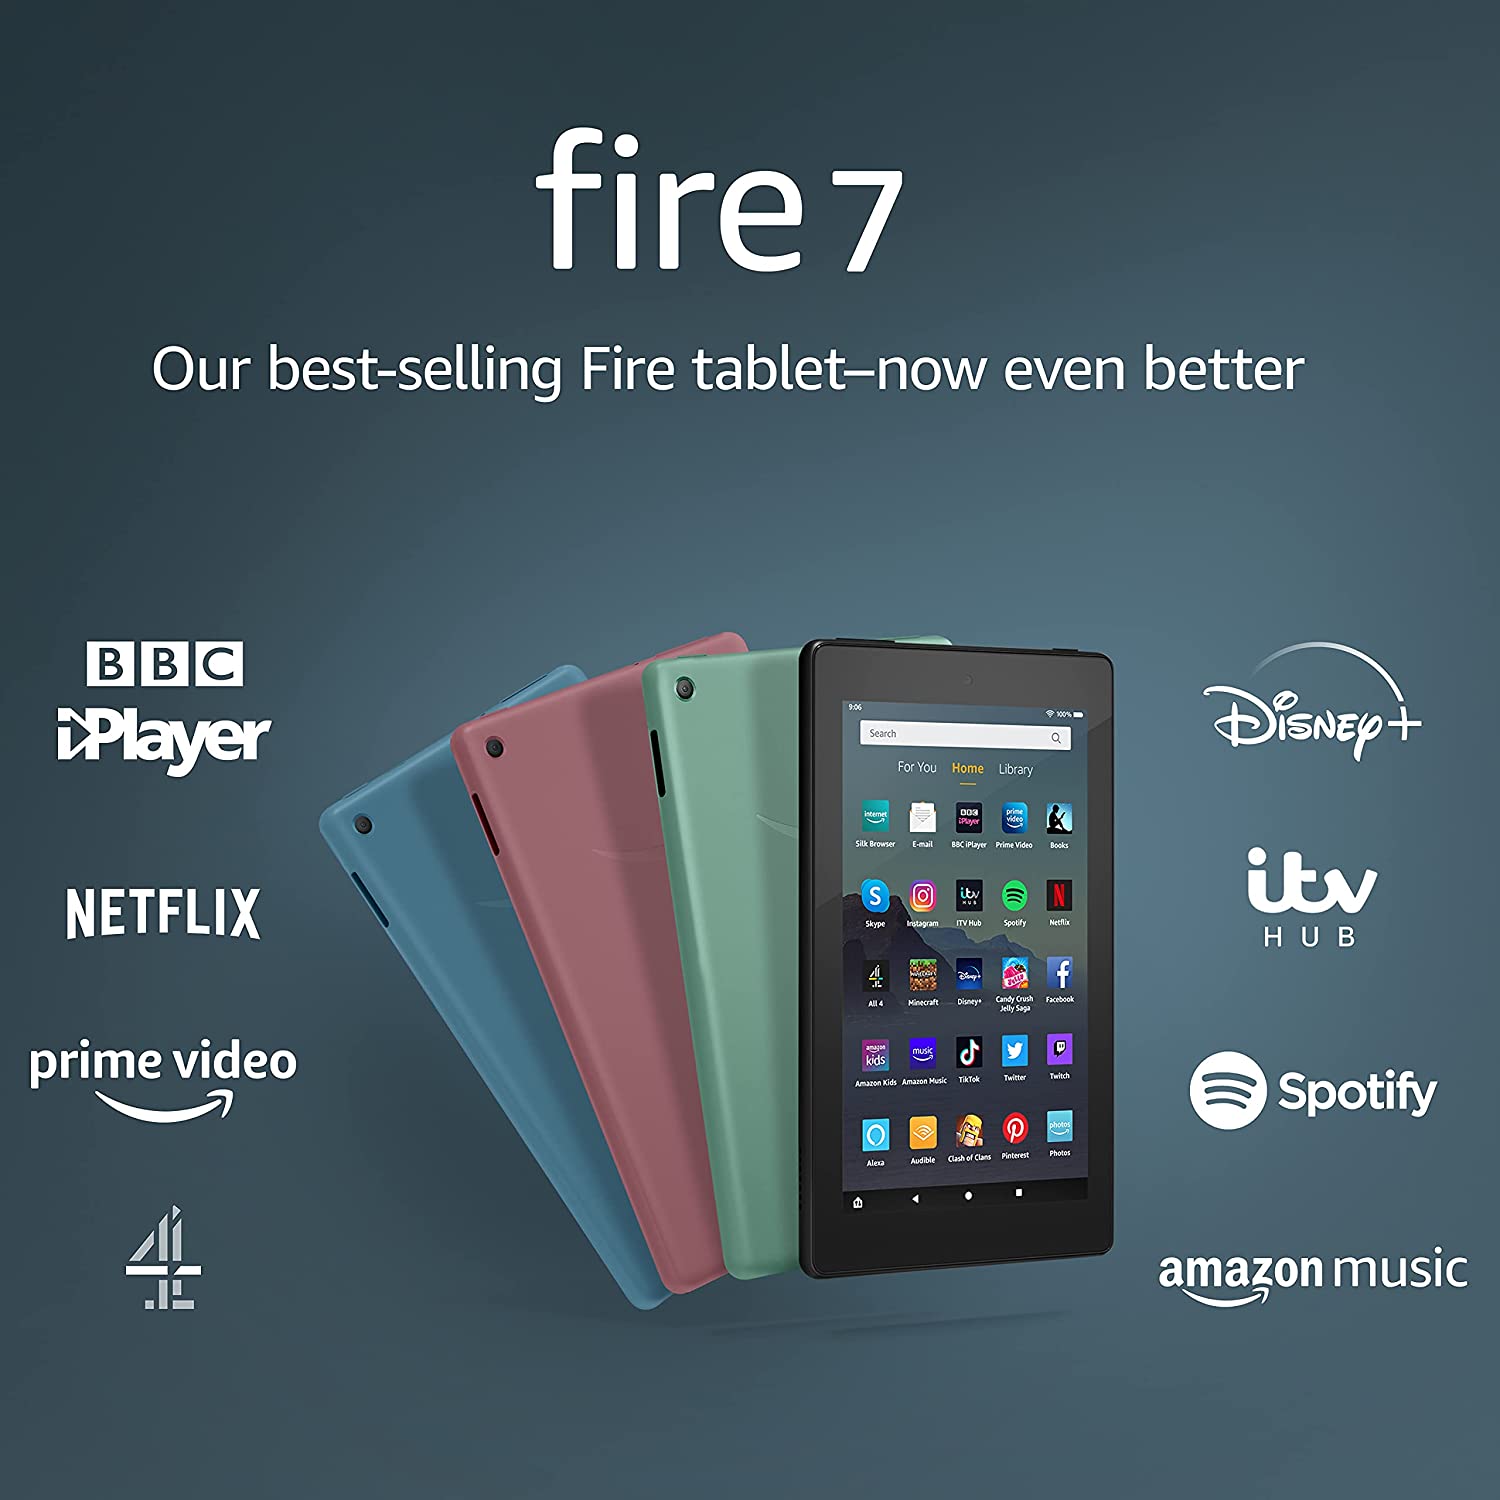 Amazon Fire 7 with Alexa 7" 16GB Tablet - Black - SR043KL - Refurbished Good